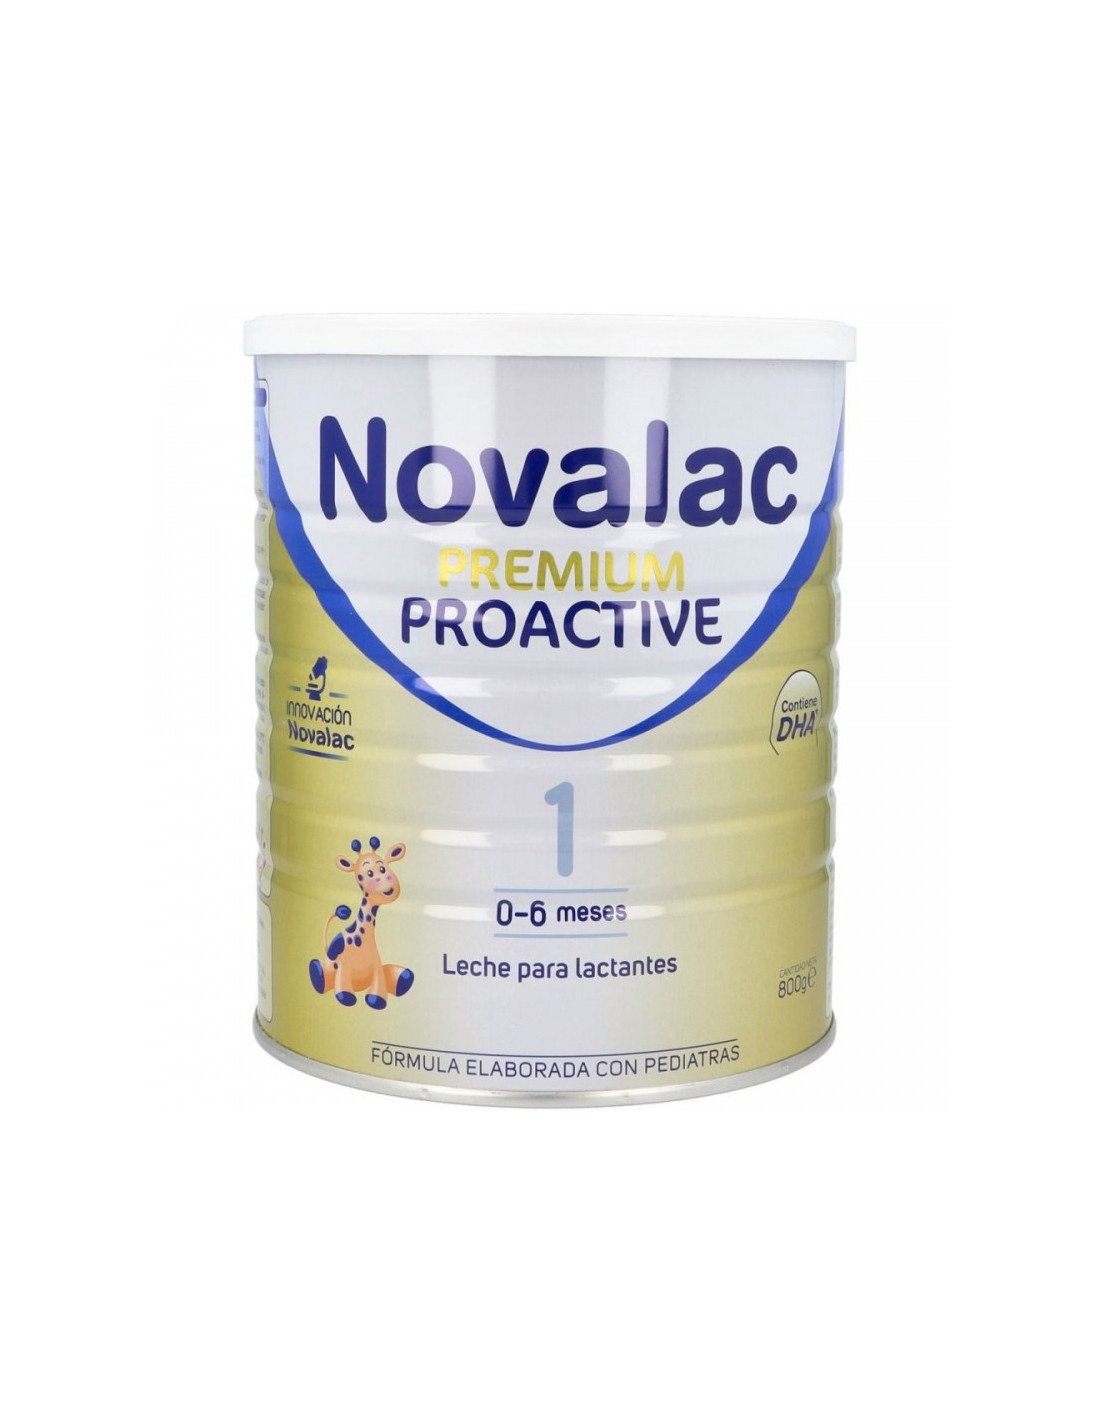 Novalac Premium Proactive 1